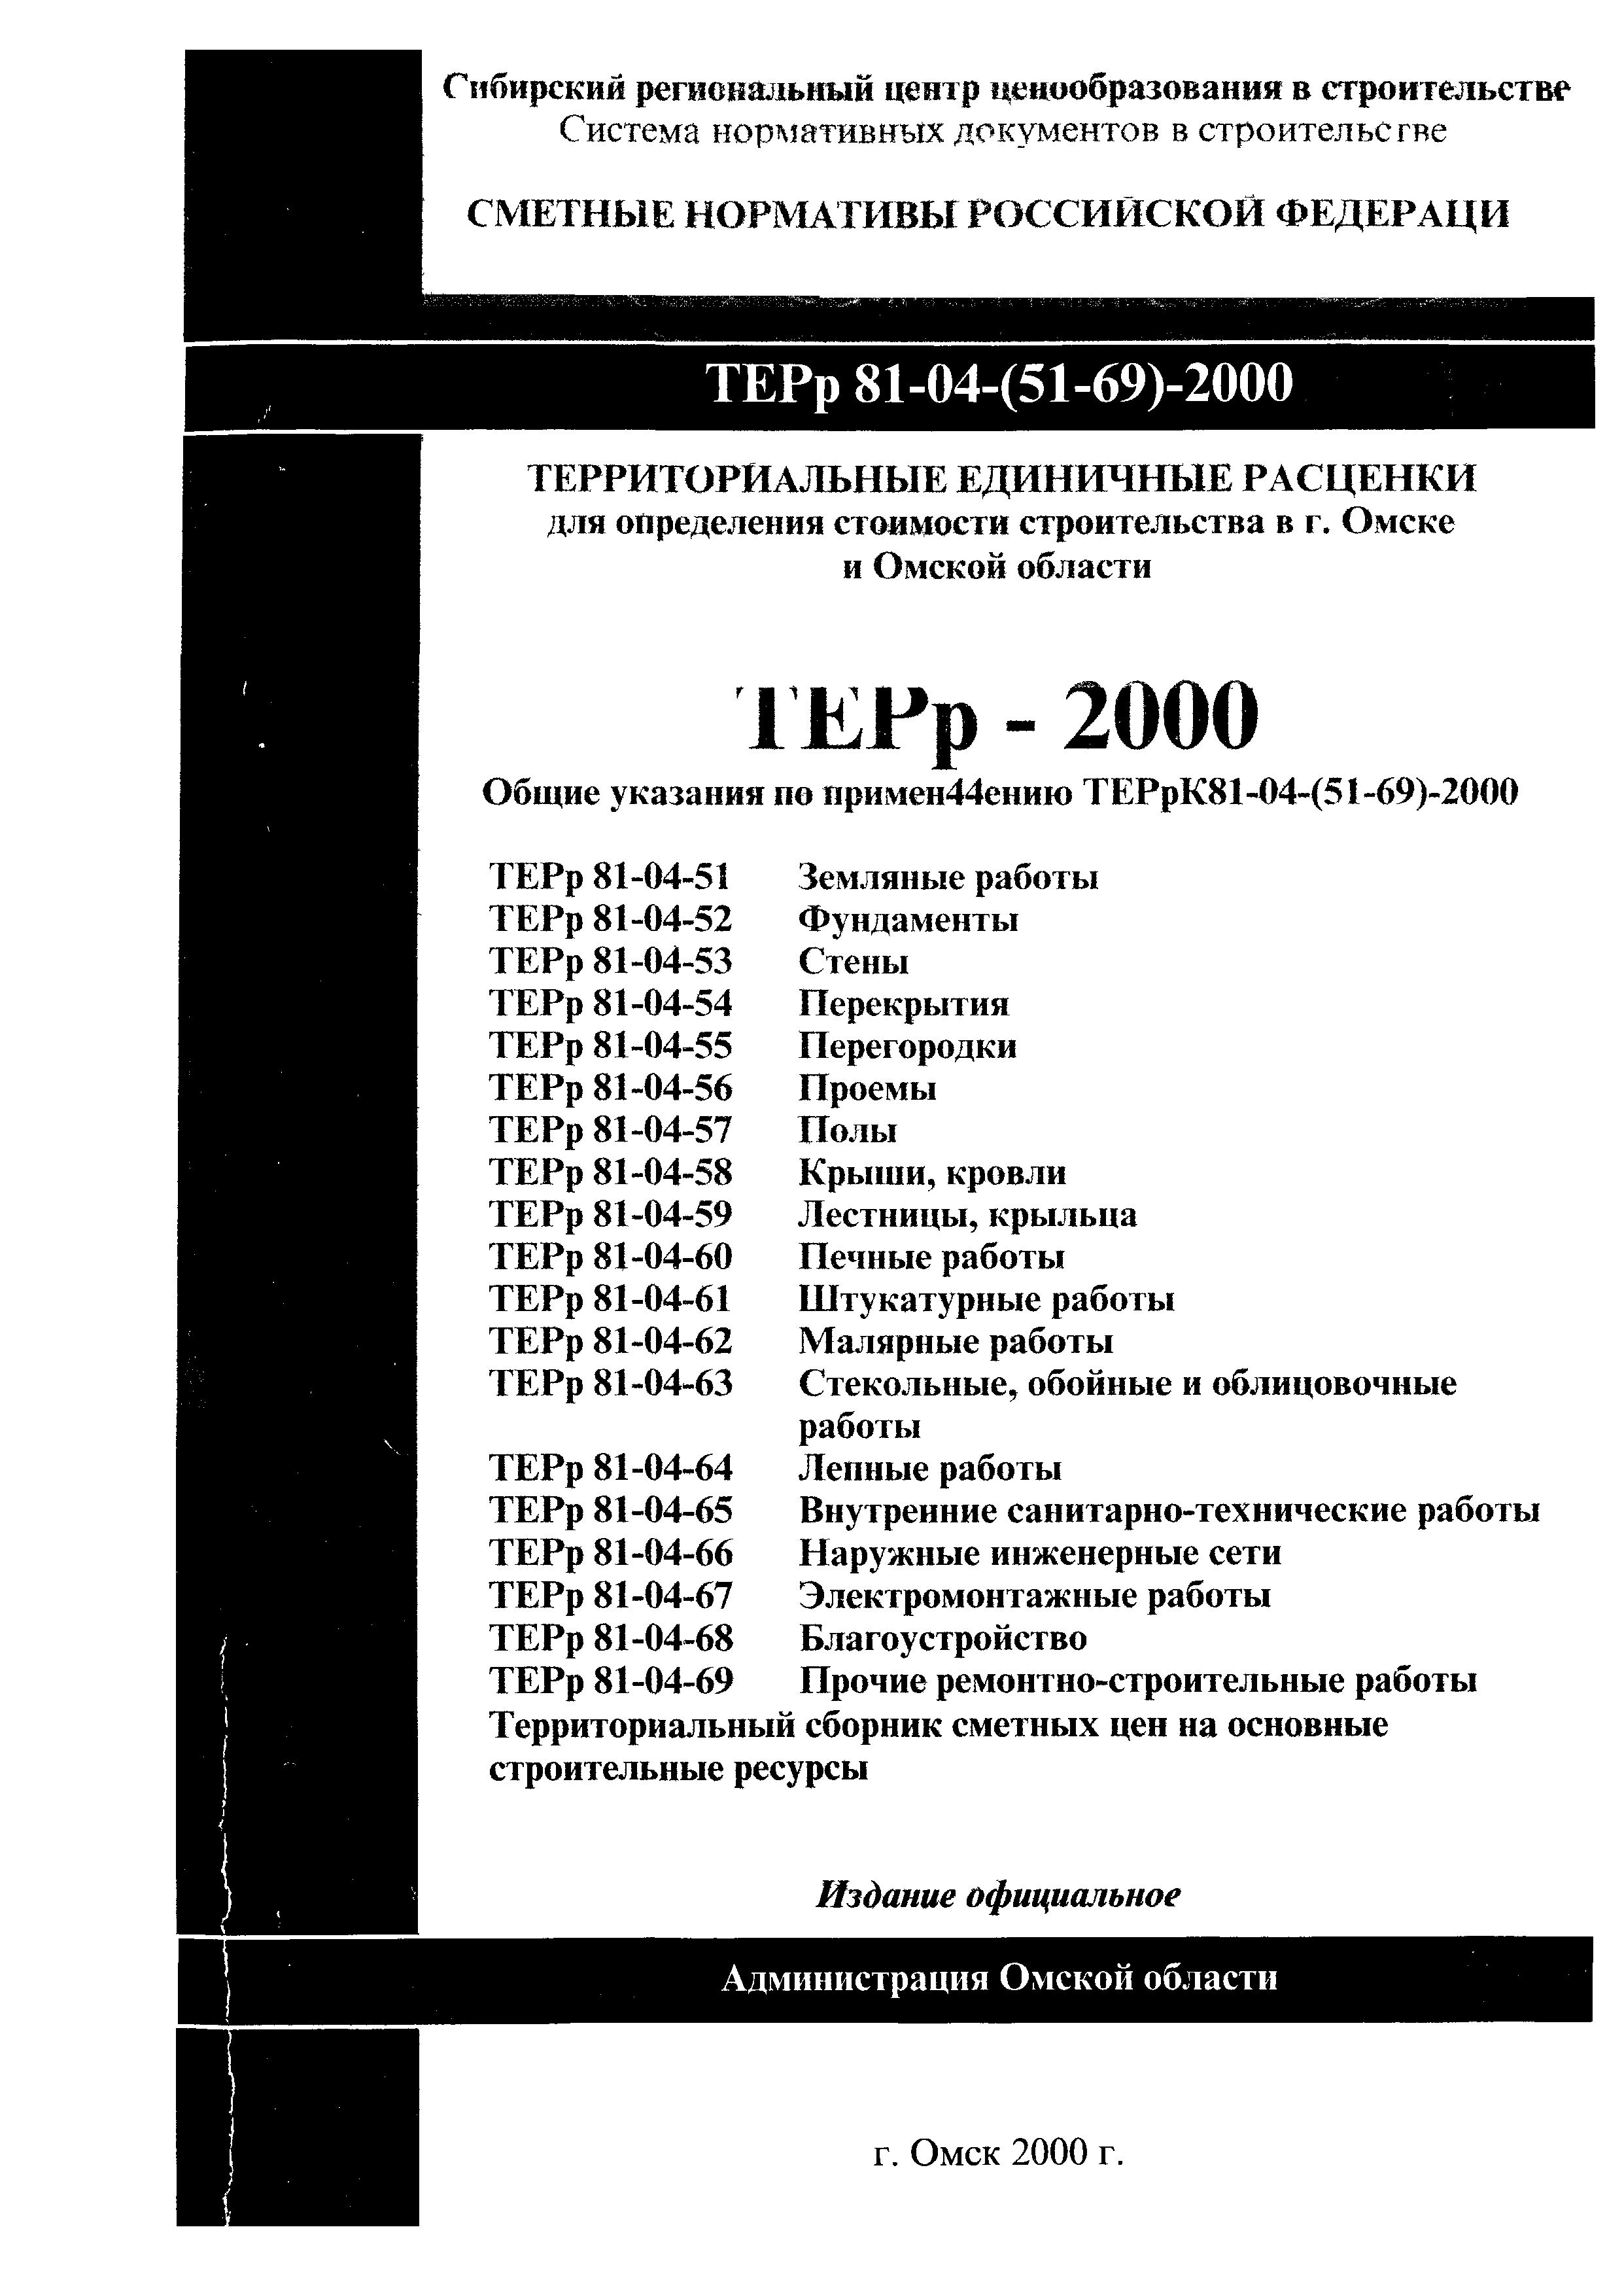 ТЕРр Омской области 2000-56